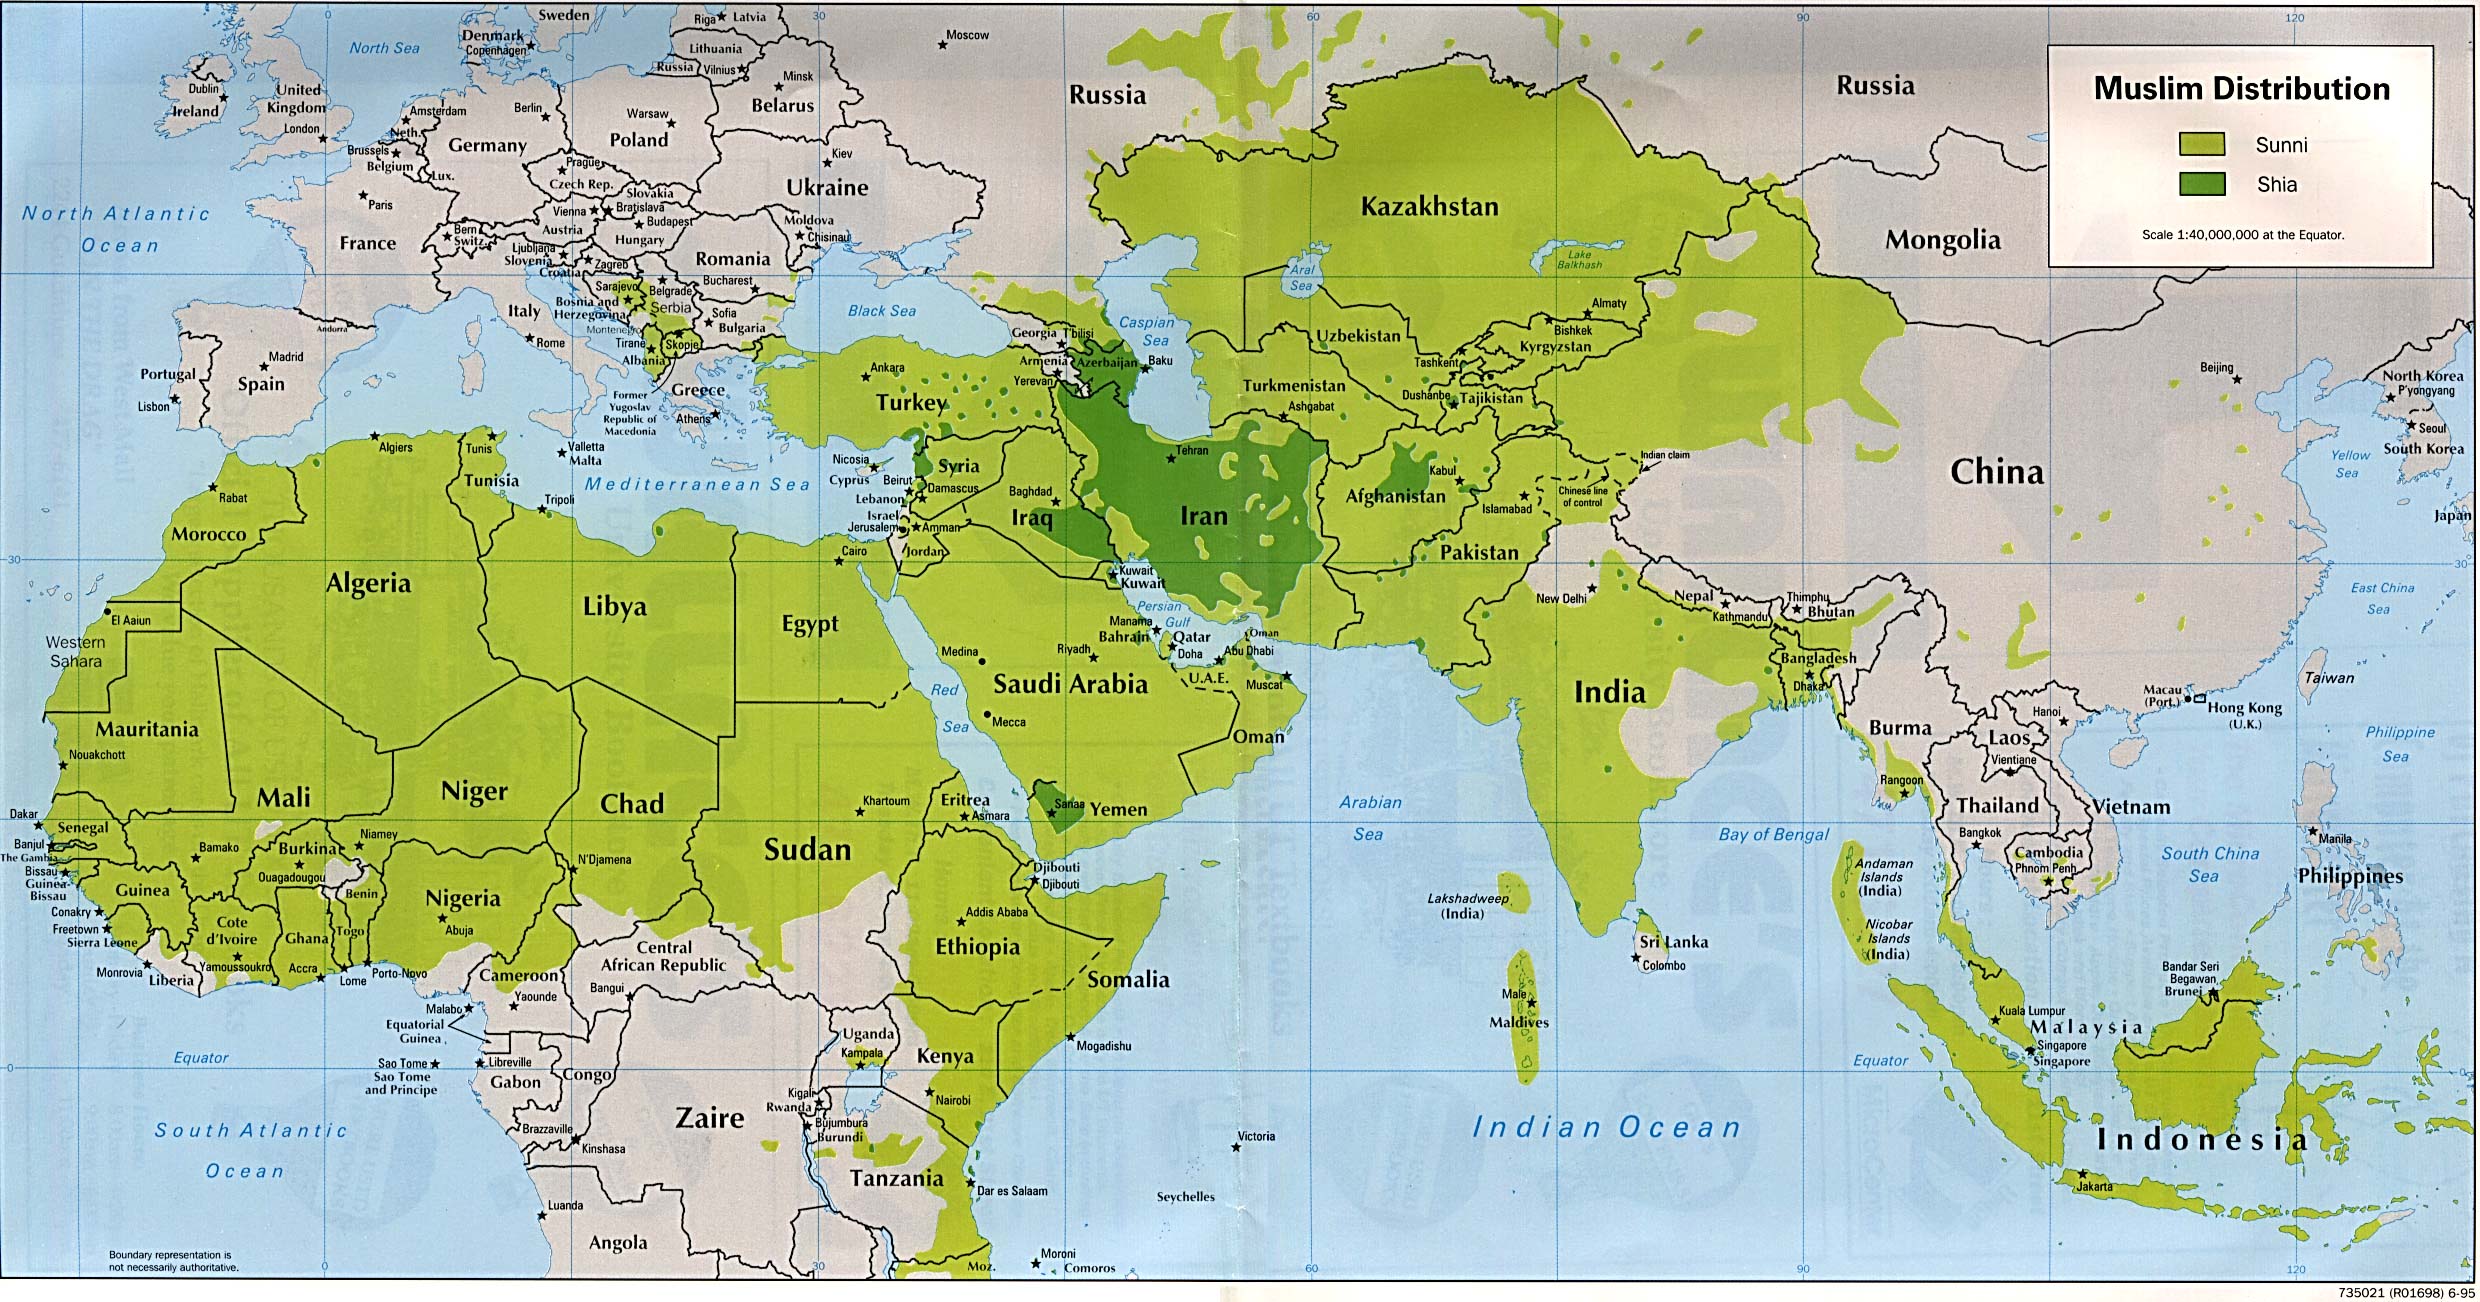 Muslim_Distribution_map.jpg